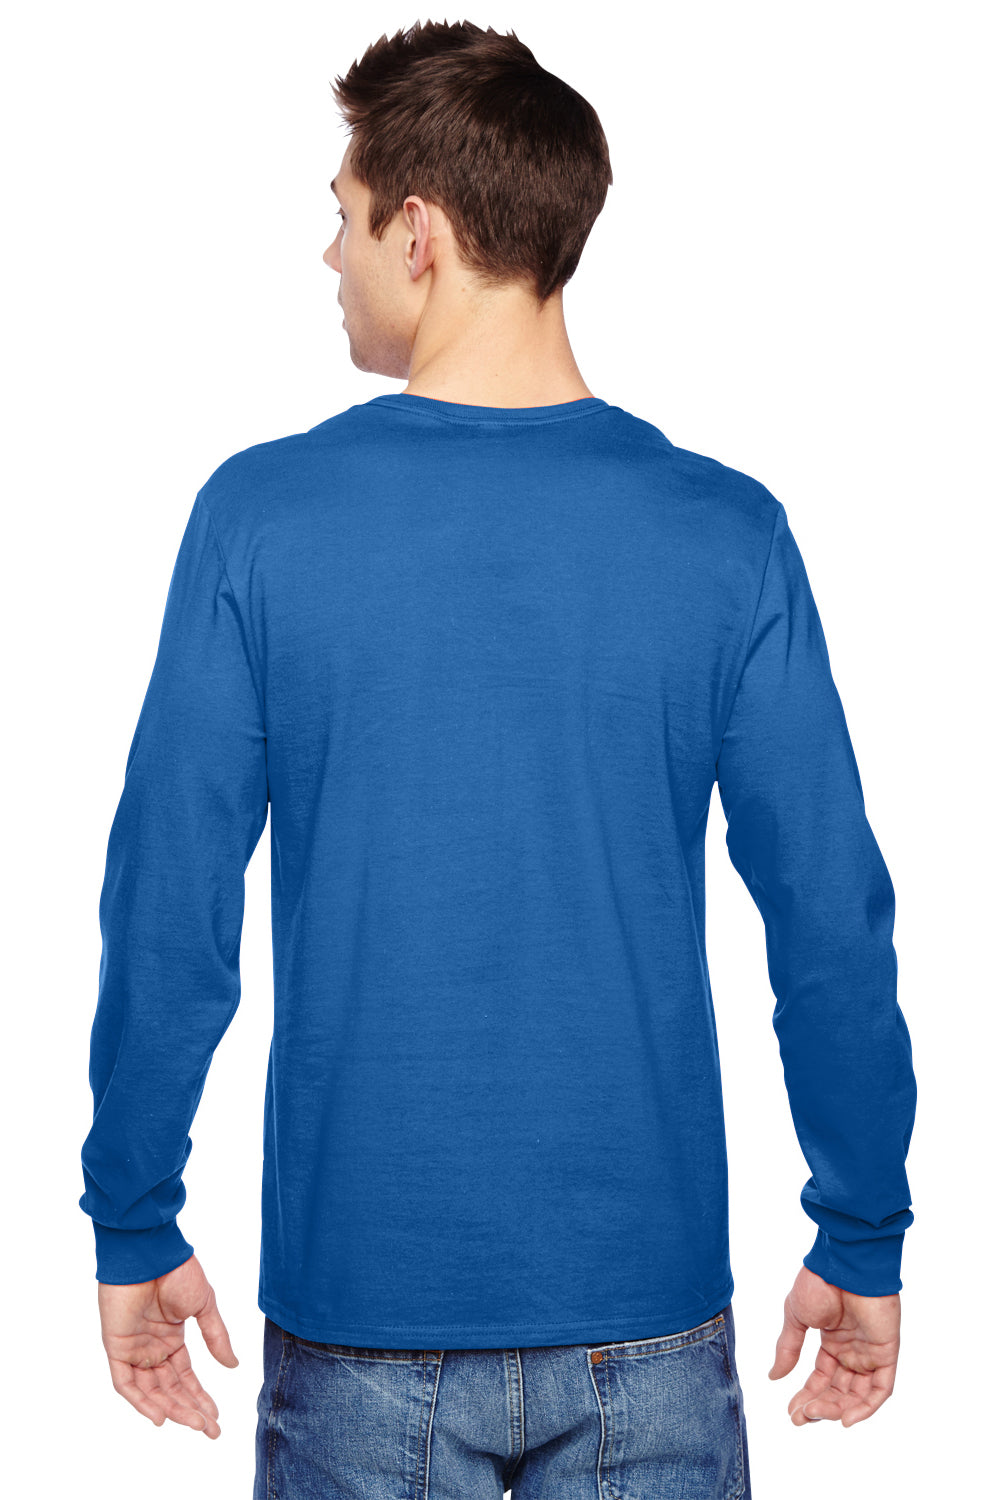 Fruit Of The Loom SFLR Mens Sofspun Jersey Long Sleeve Crewneck T-Shirt Royal Blue Back